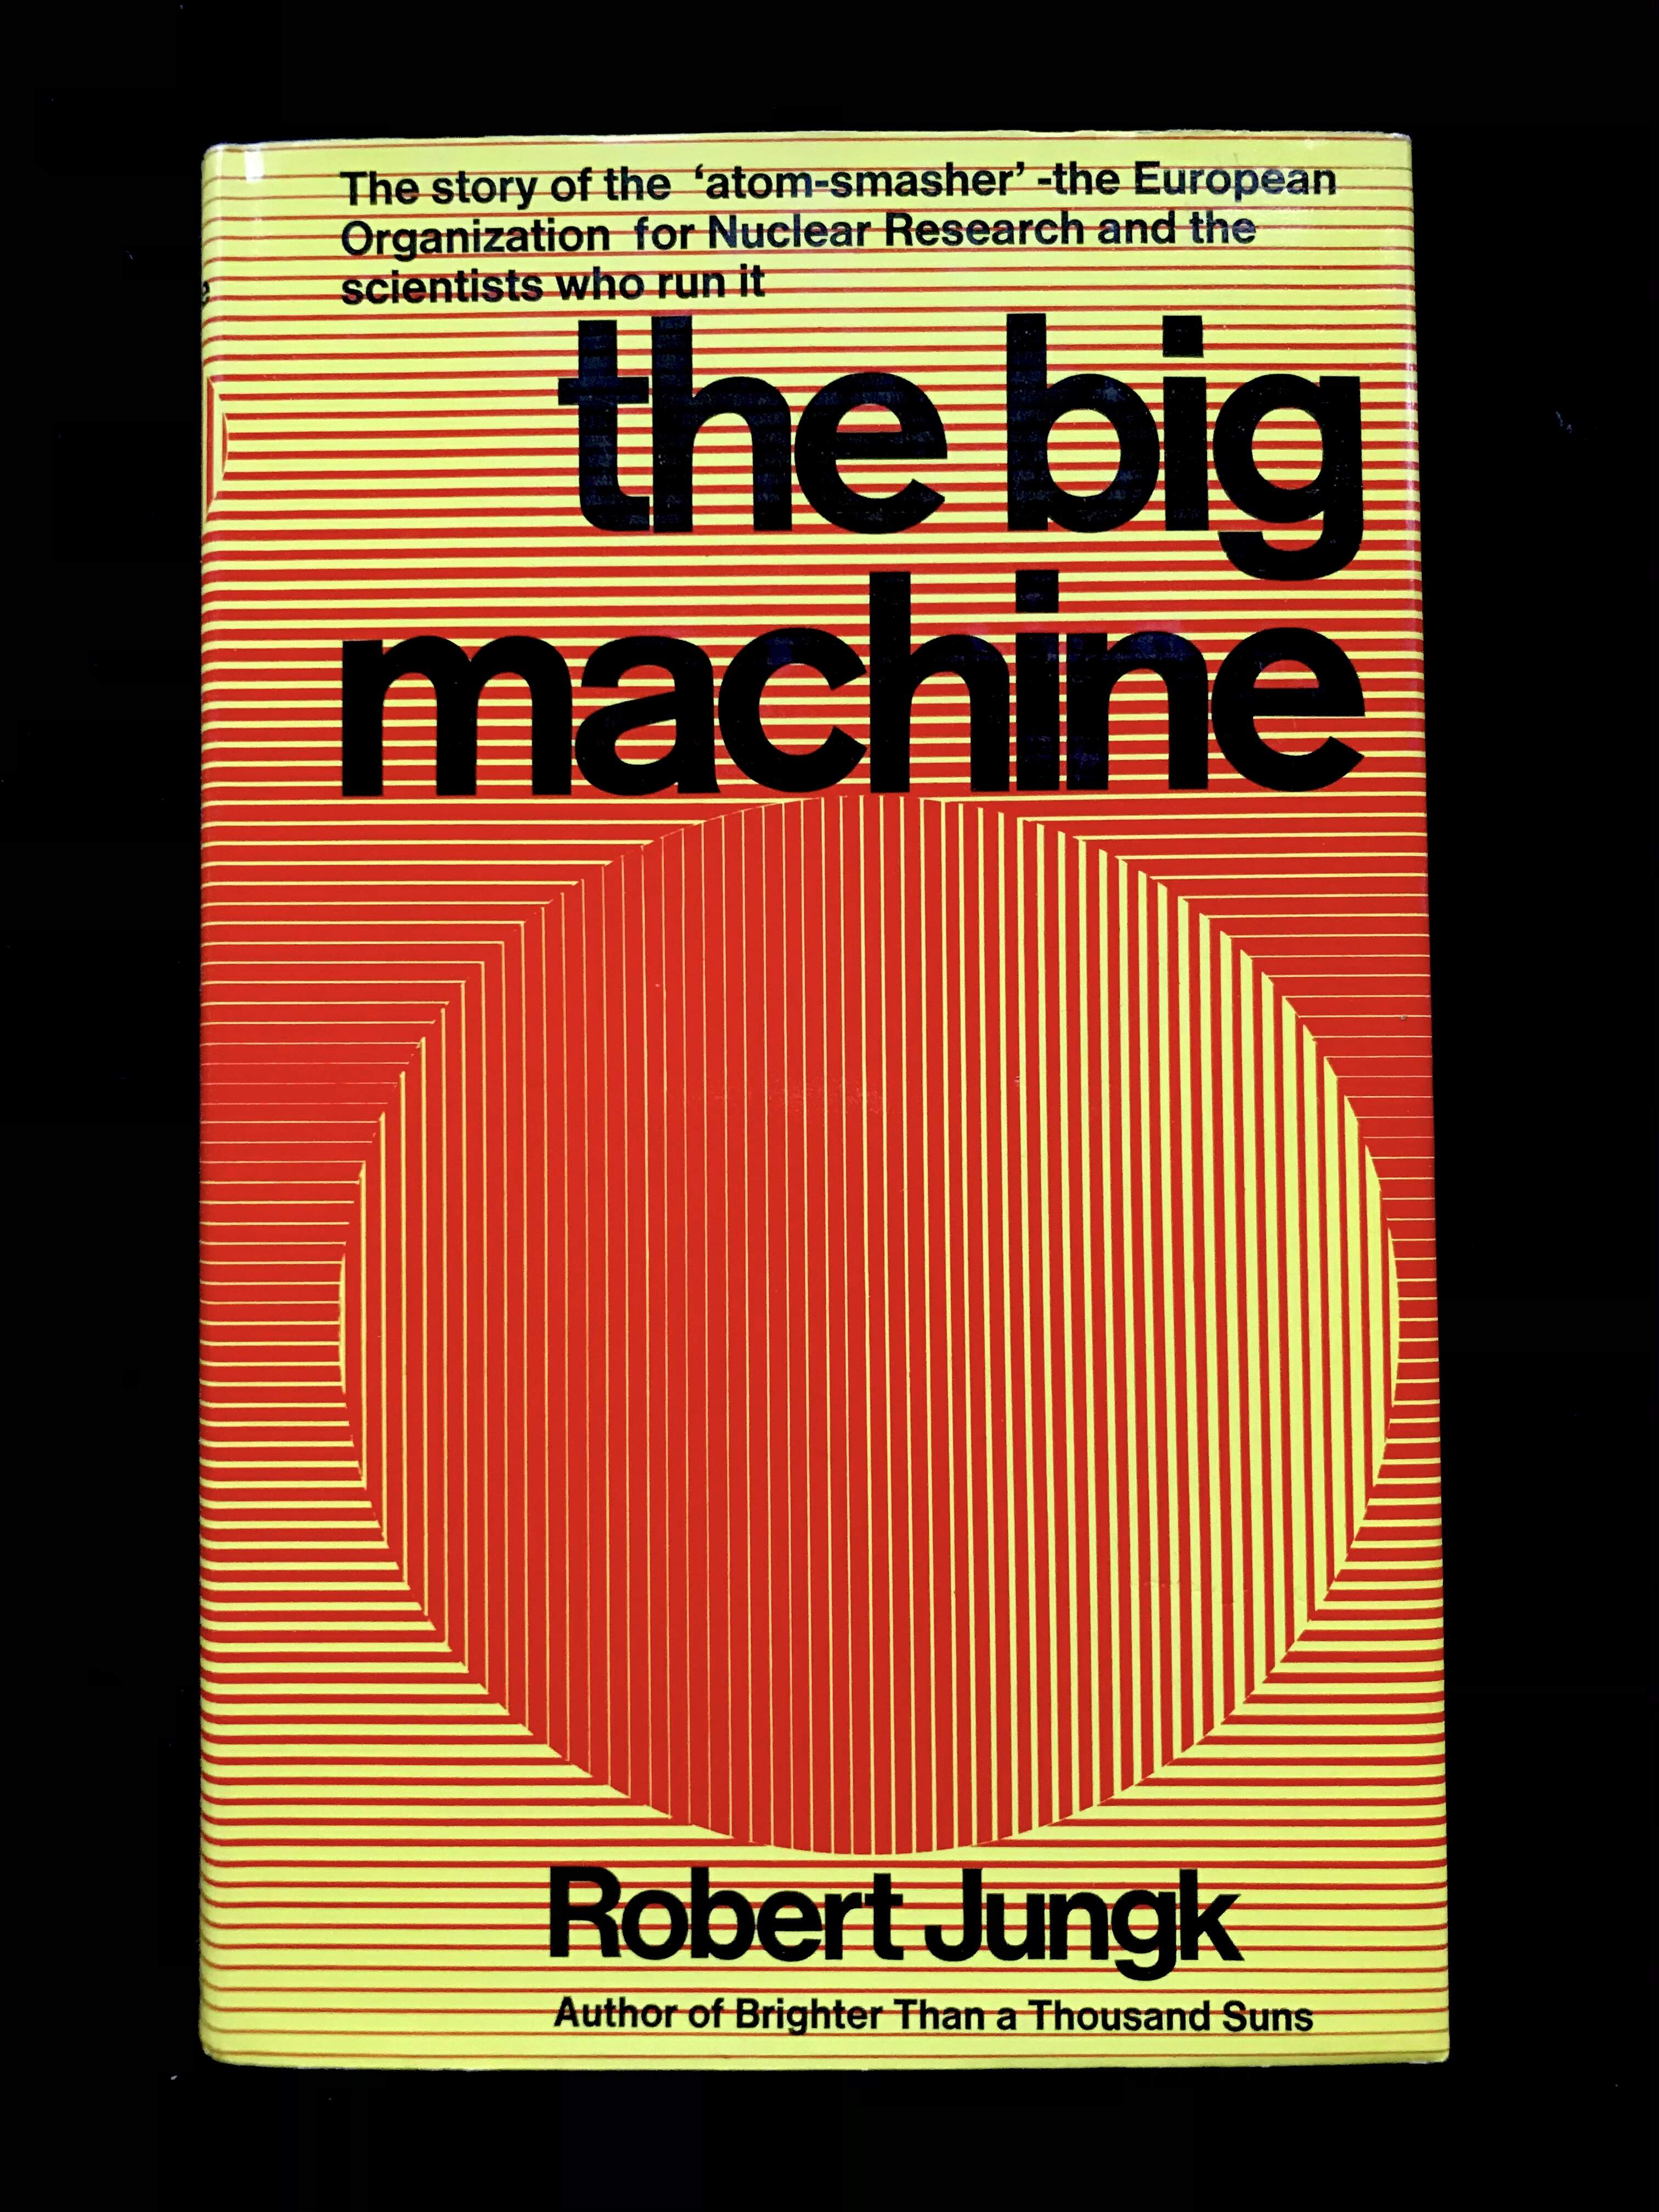 The Big Machine by Robert Jungk